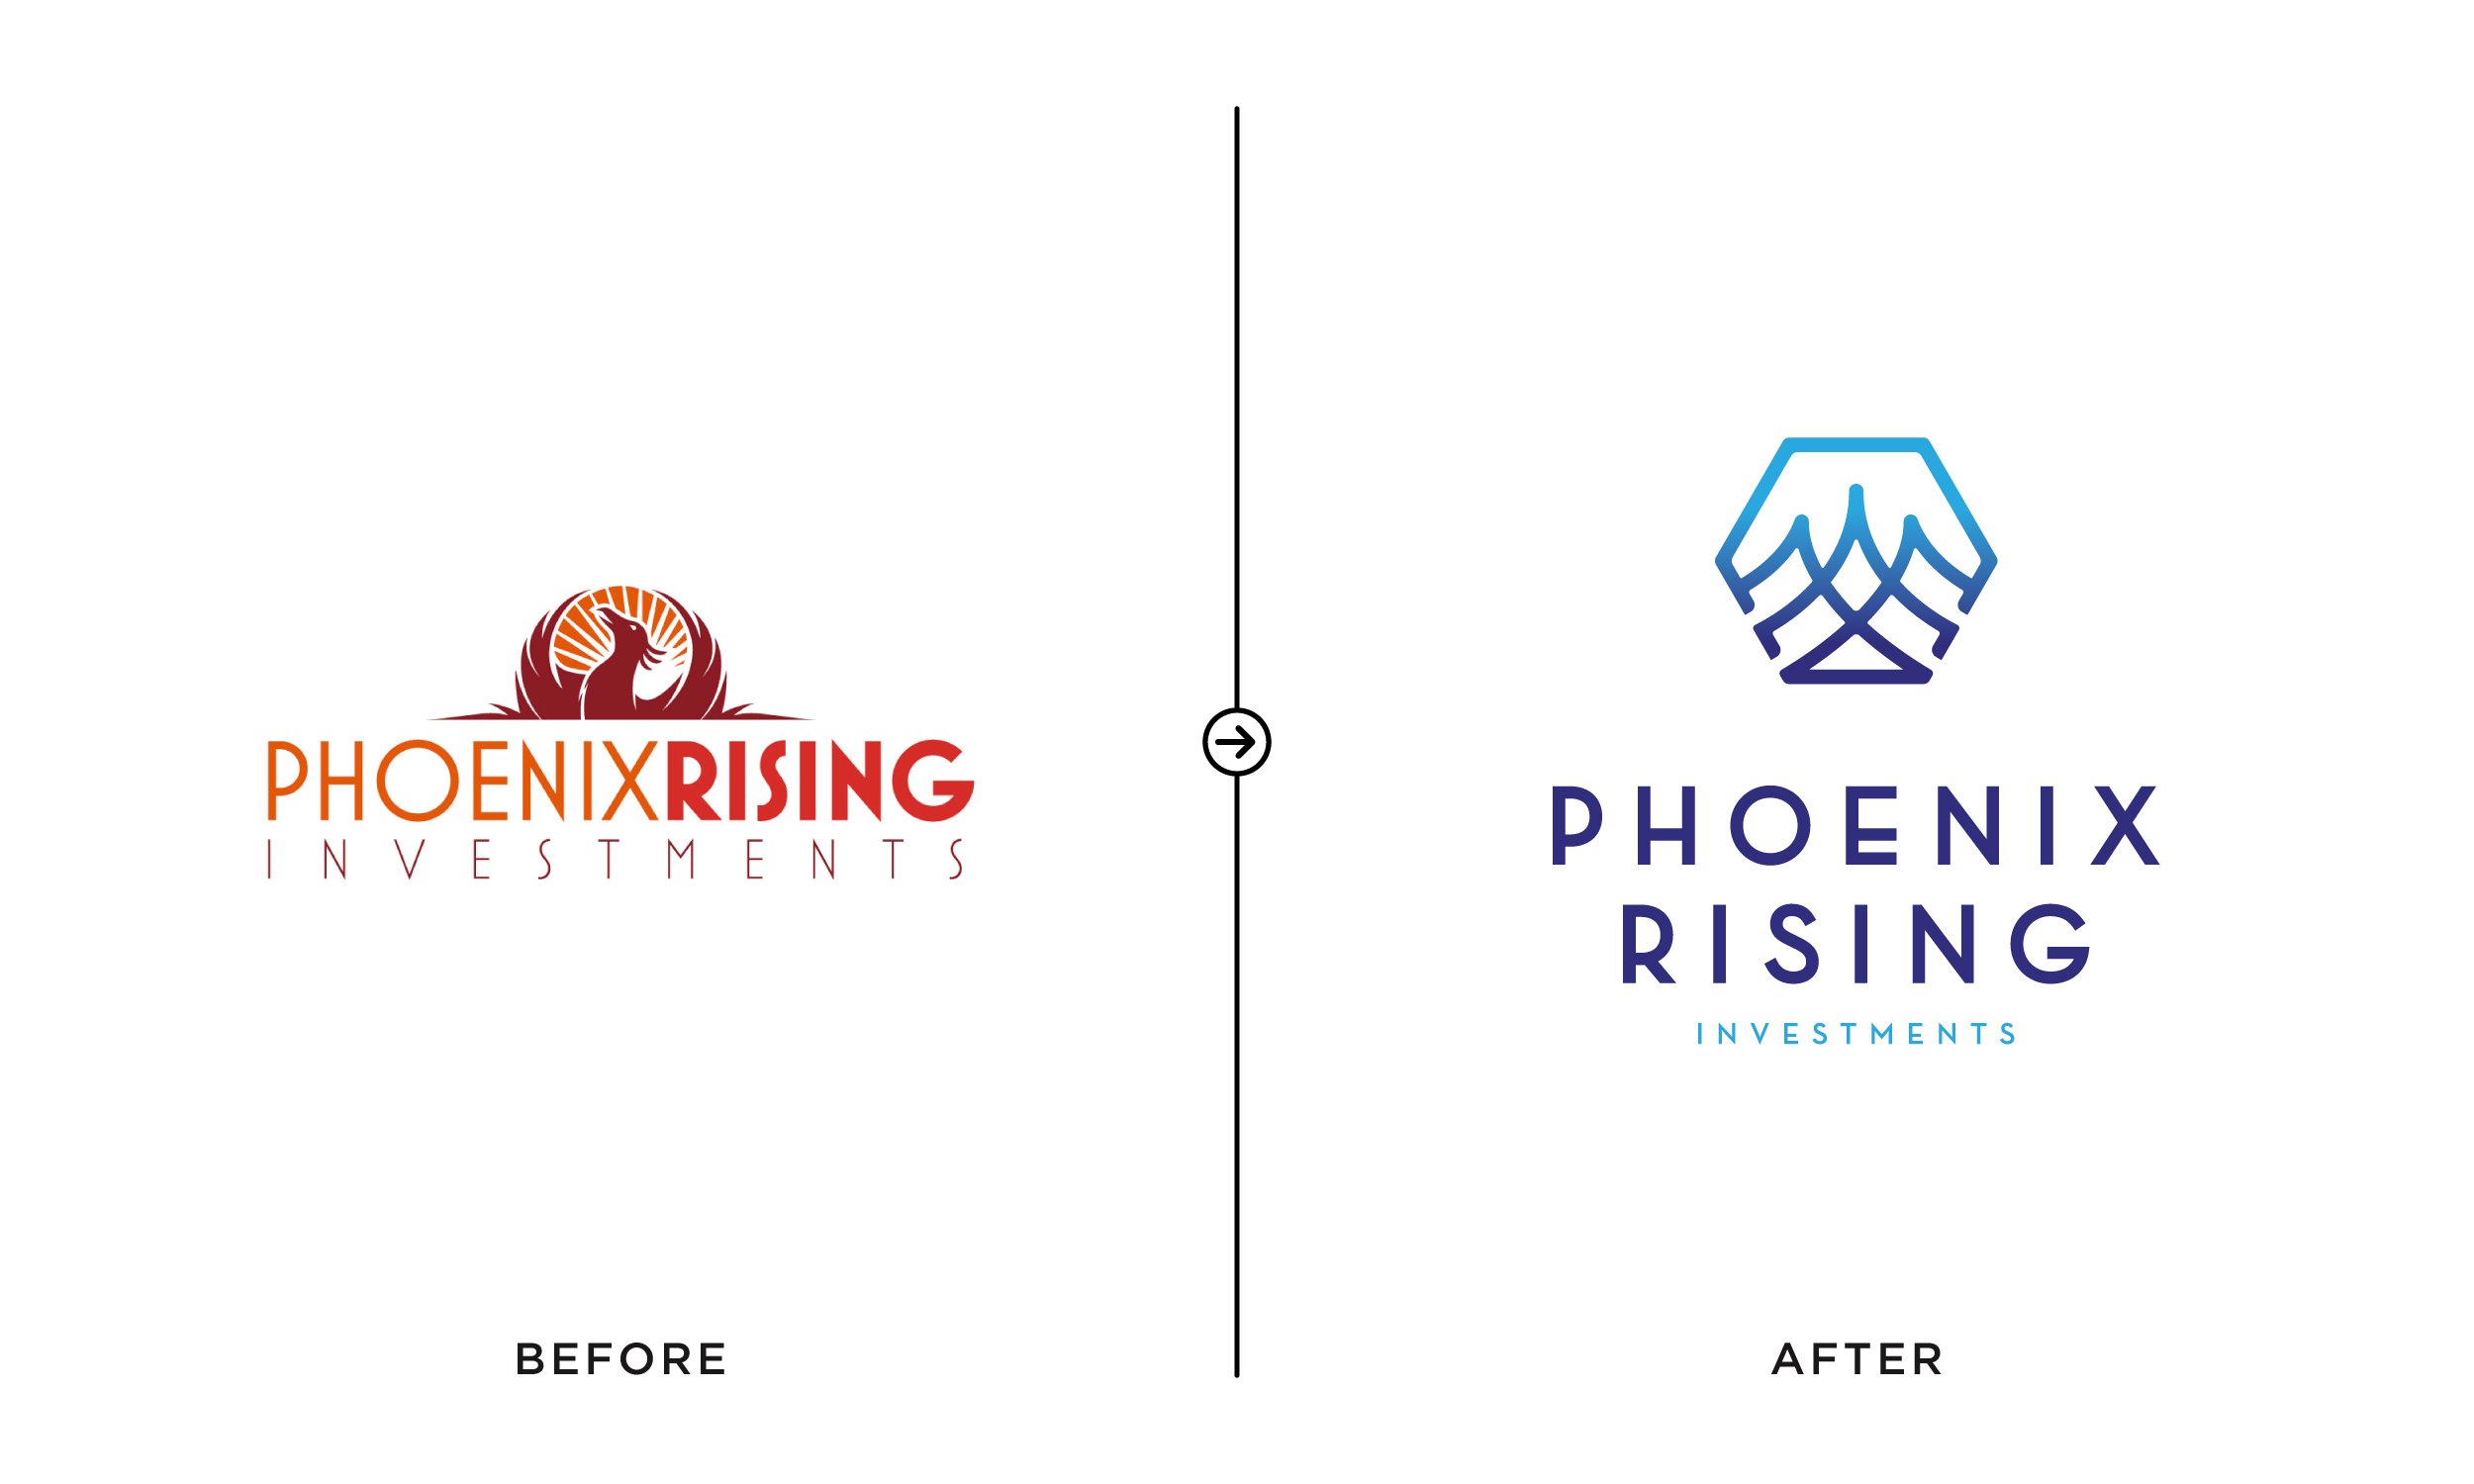 PhoenixRising_Logo_Before&After.jpg